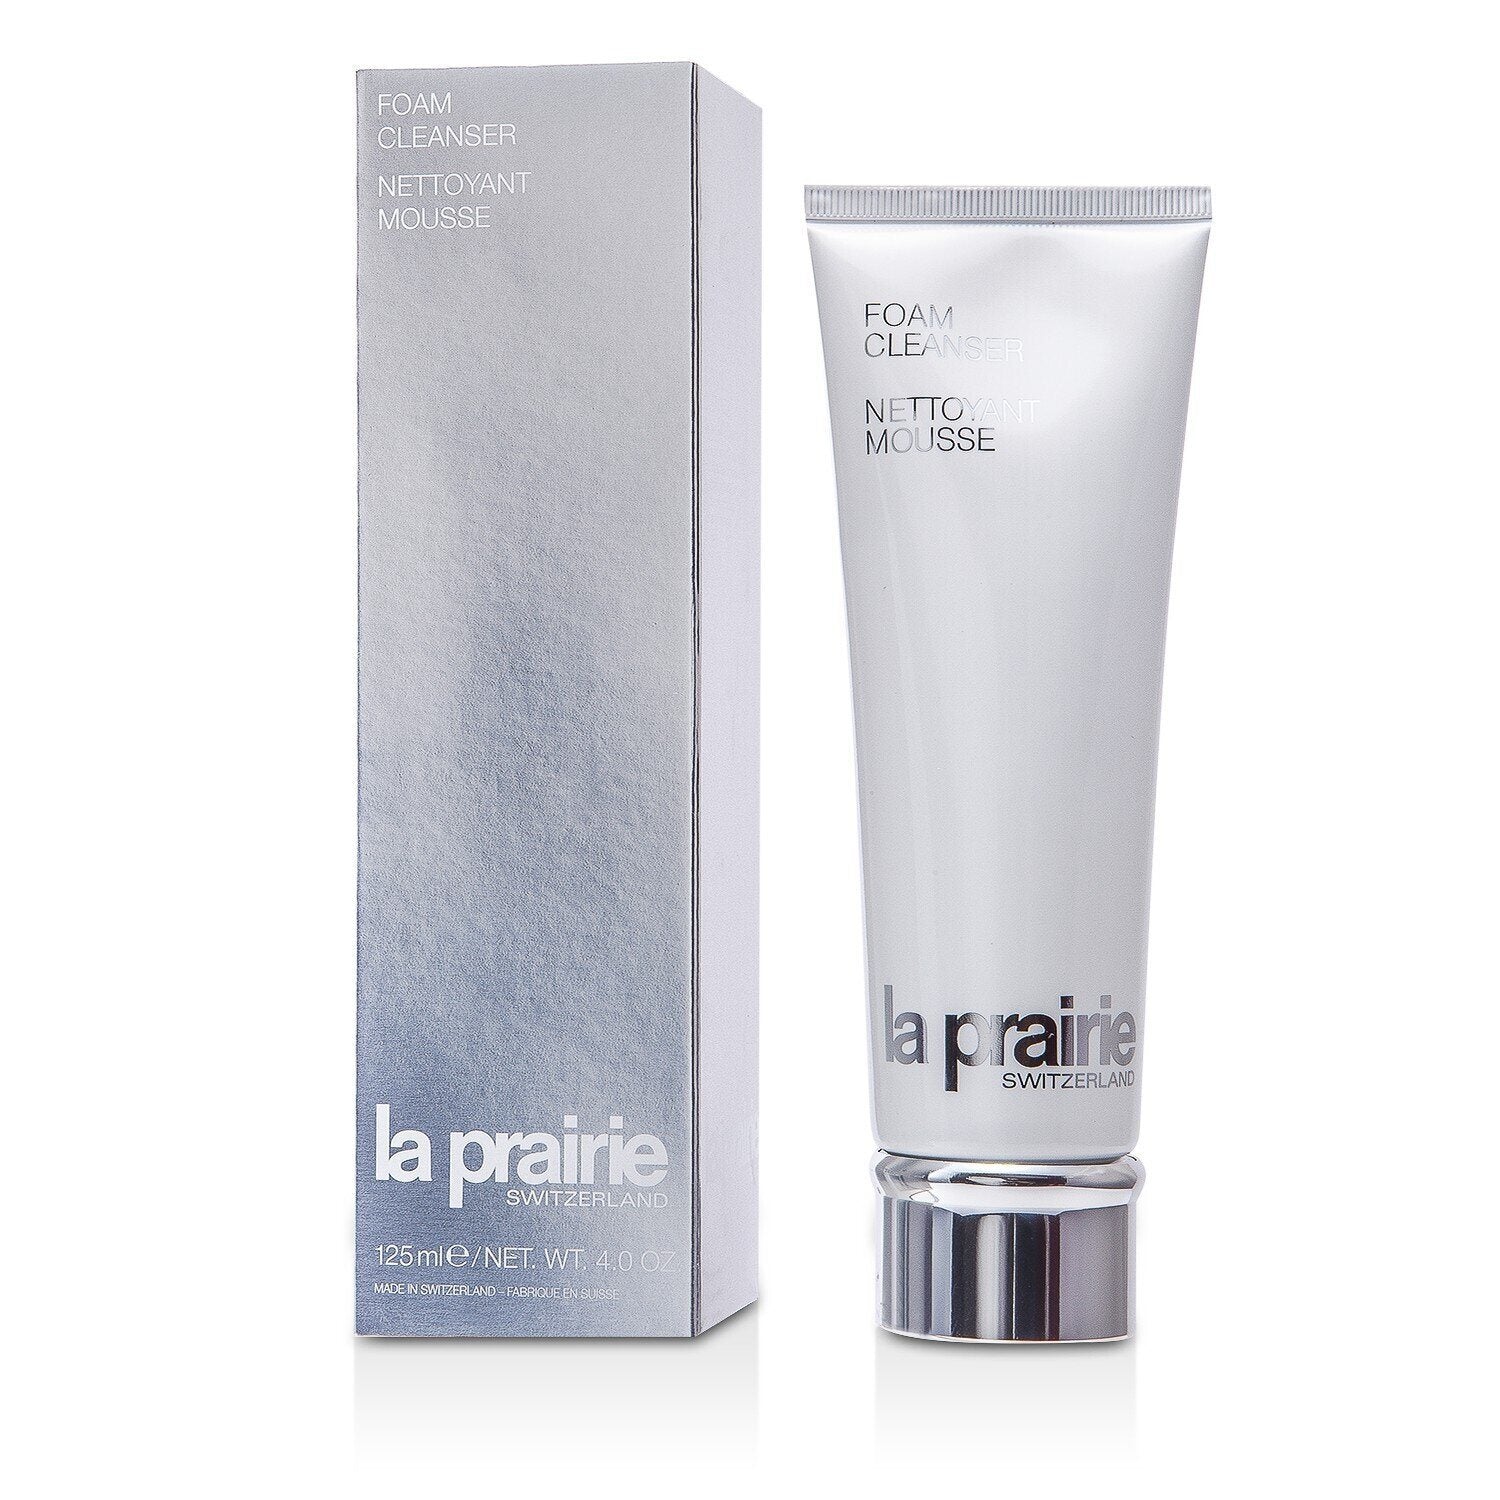 LA PRAIRIE - Foam Cleanser - 125ml/4.2oz 3P's Inclusive Beauty